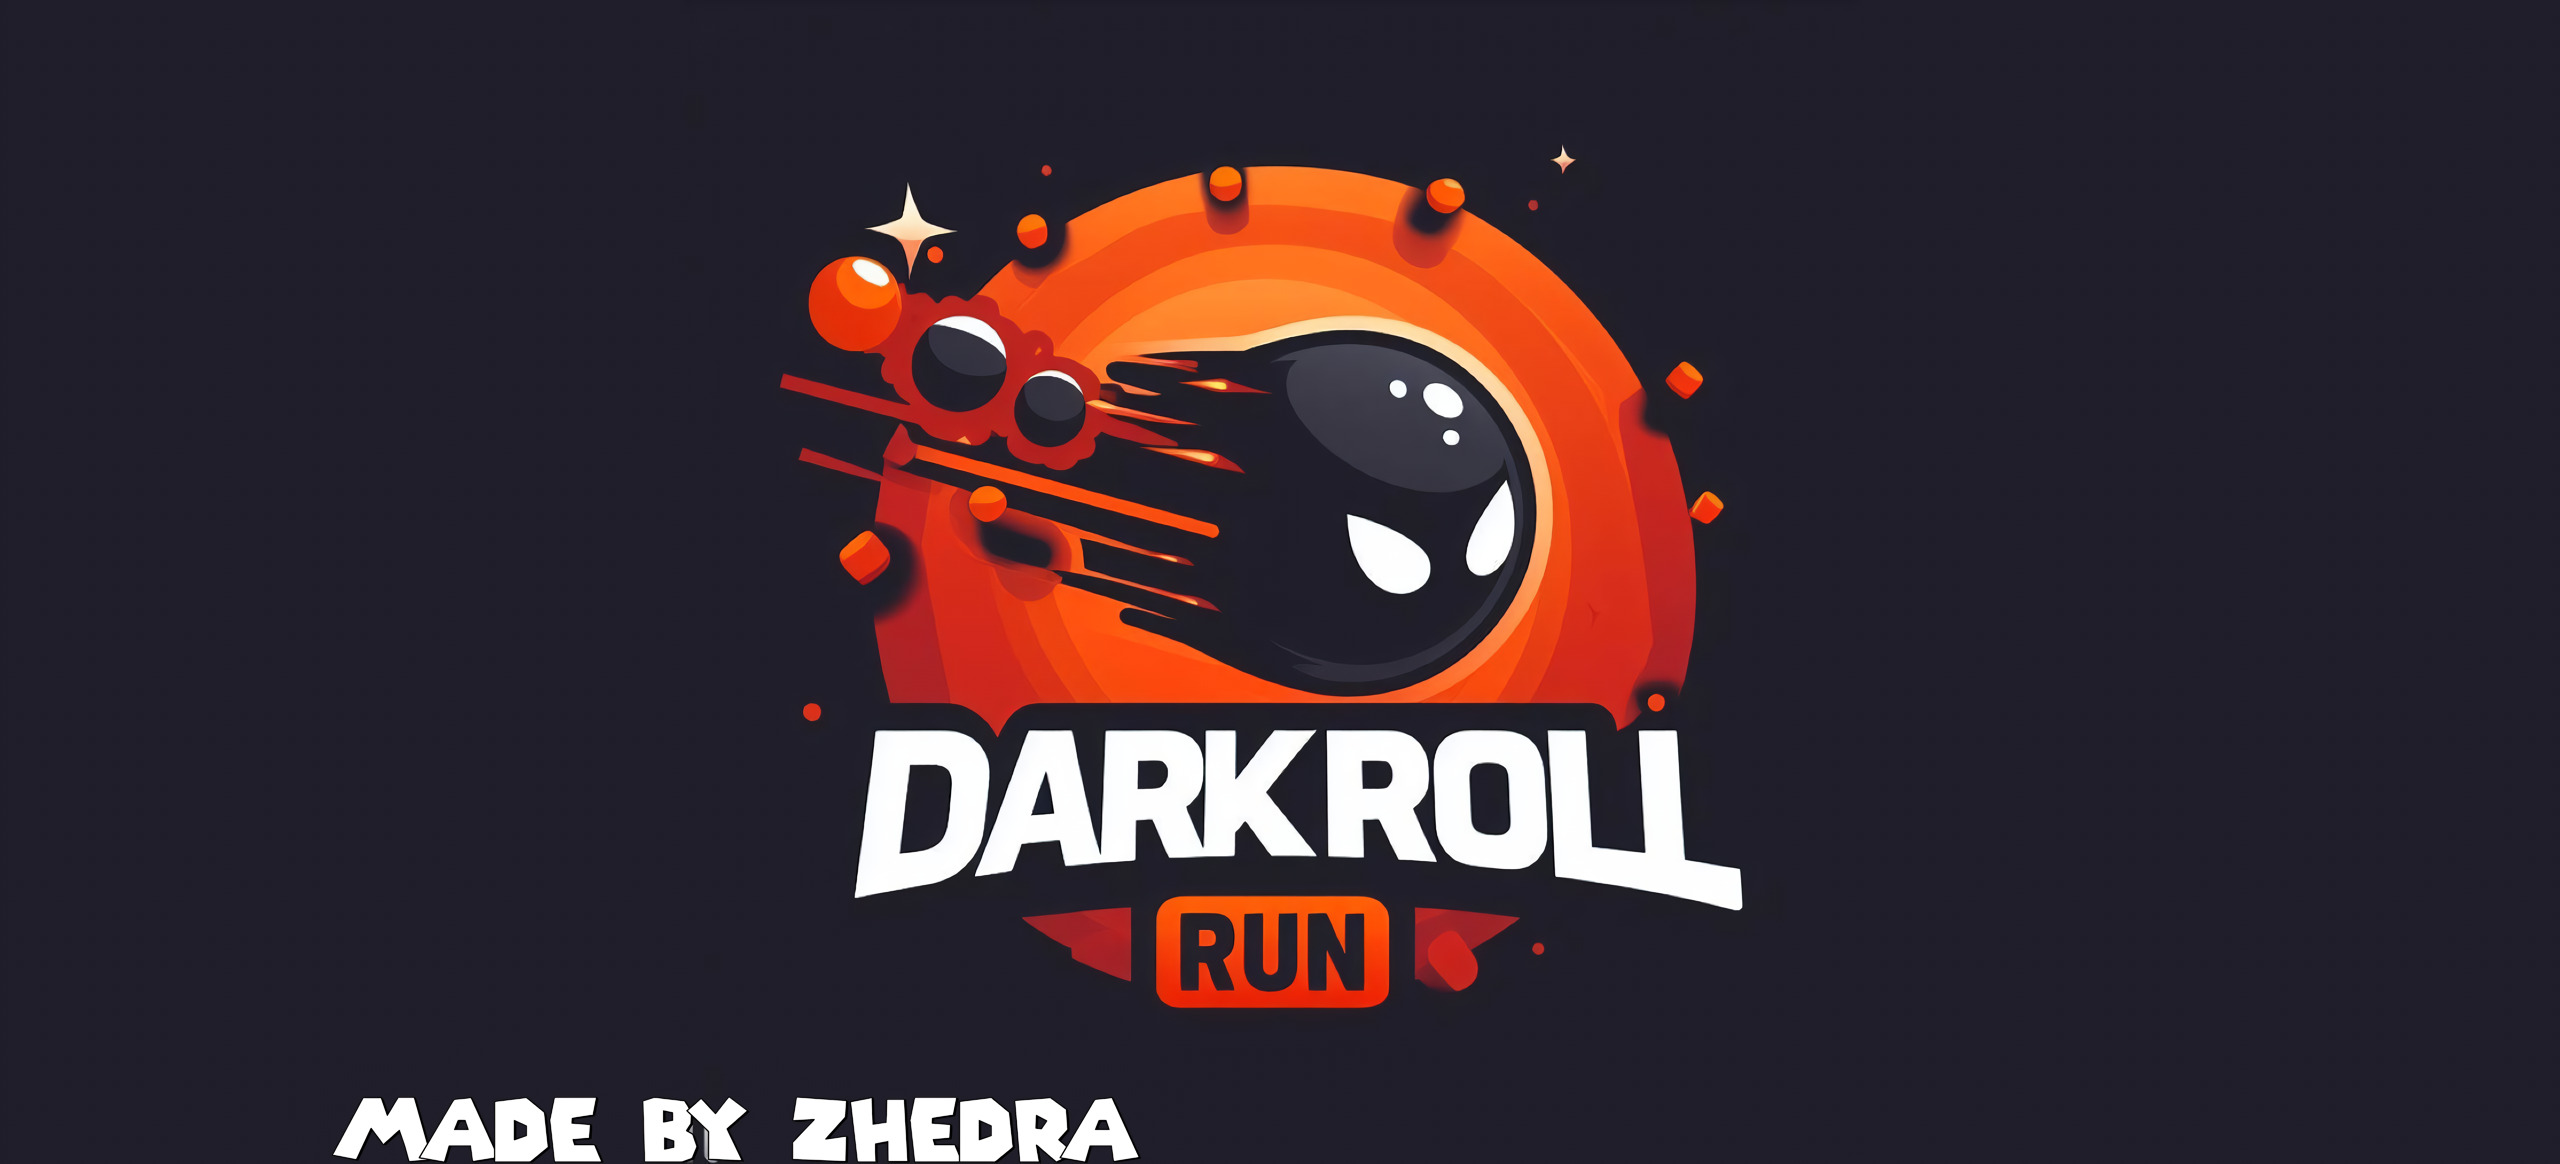 DarkRoll Run